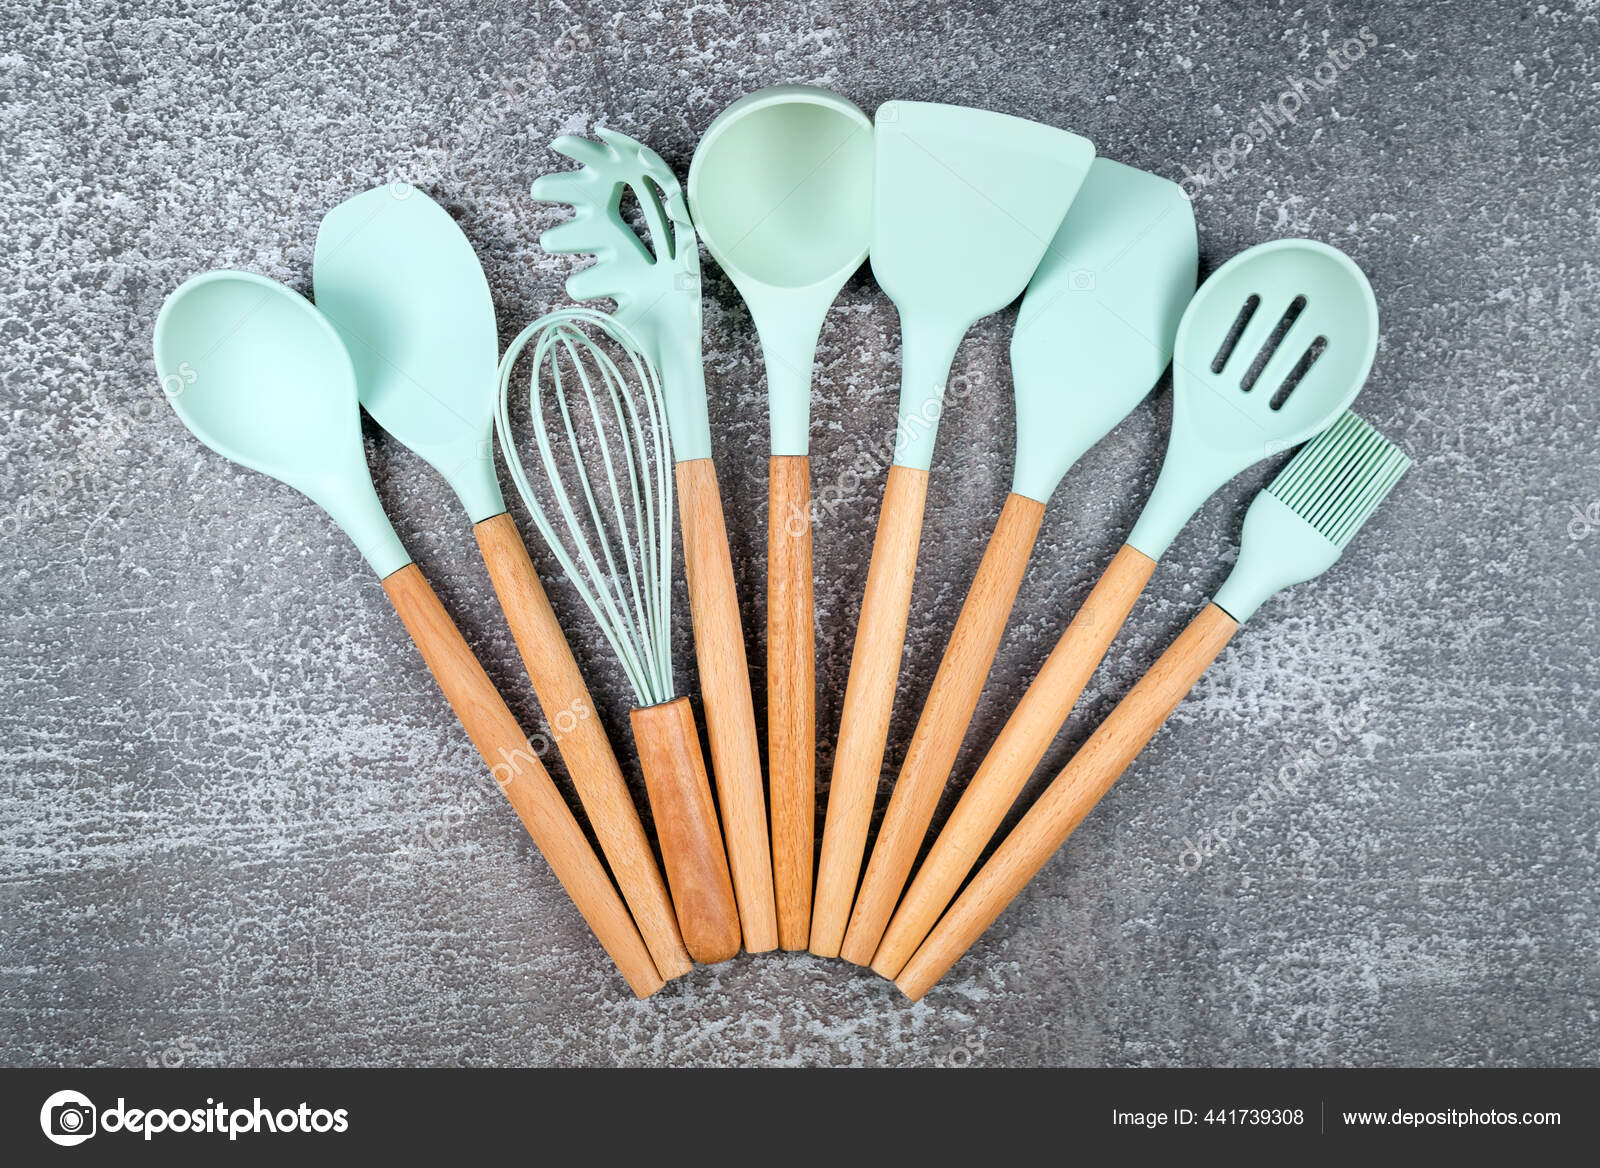 https://st2.depositphotos.com/2815743/44173/i/1600/depositphotos_441739308-stock-photo-kitchen-utensils-home-kitchen-tools.jpg